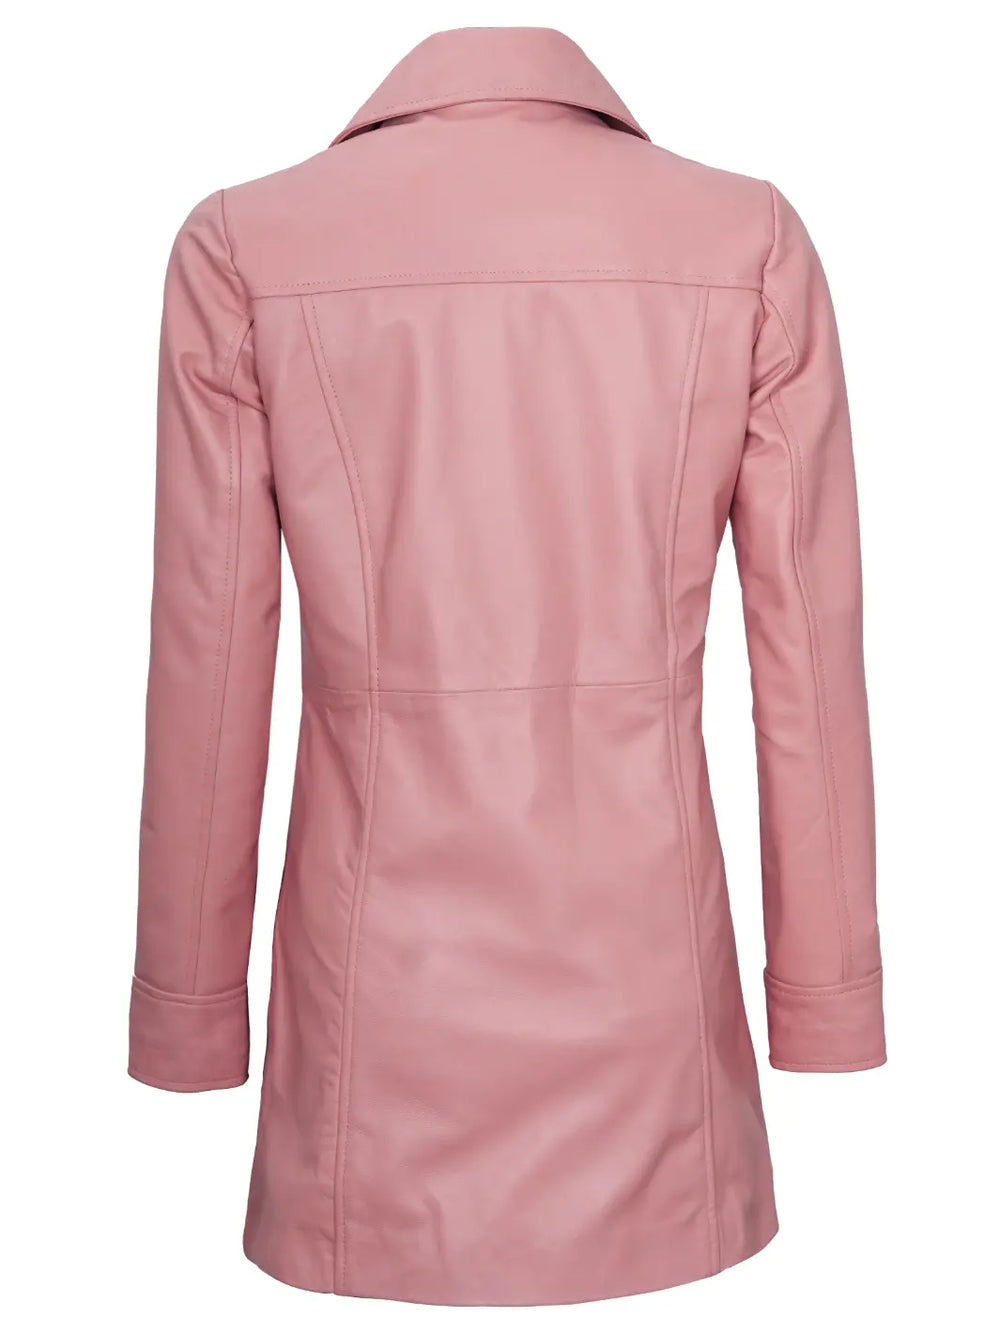 Women pink leather coat